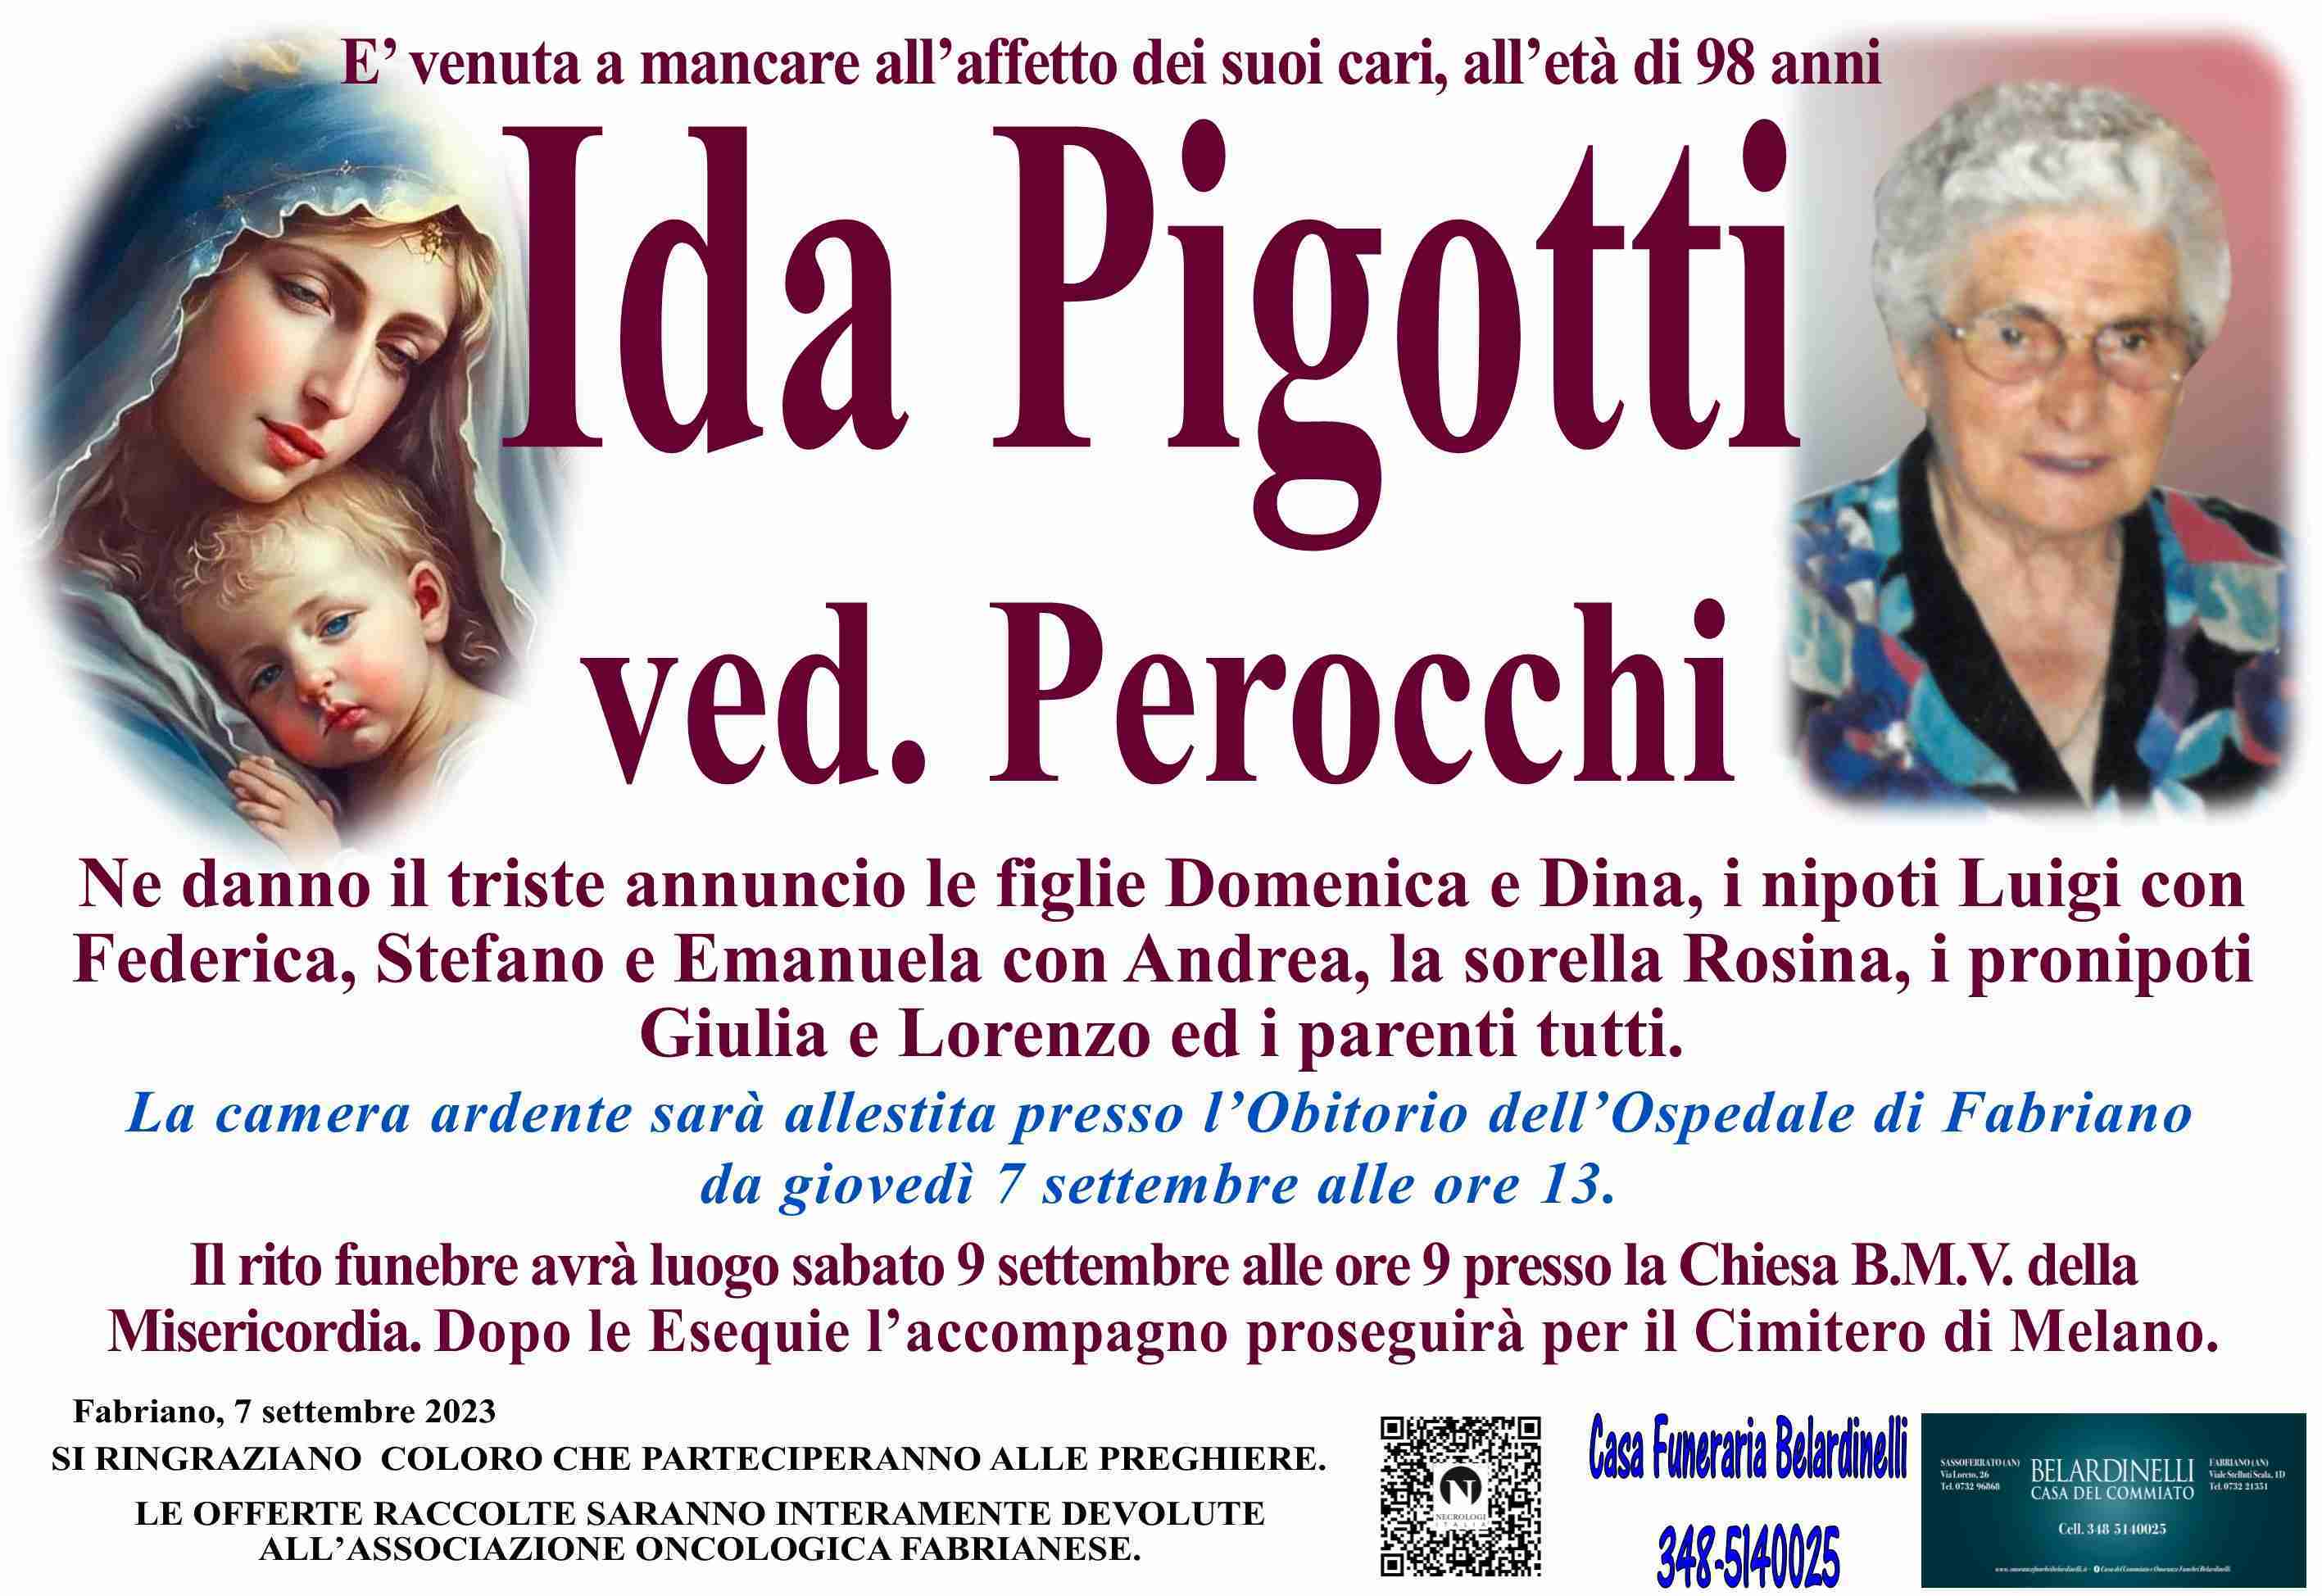 Ida Pigotti